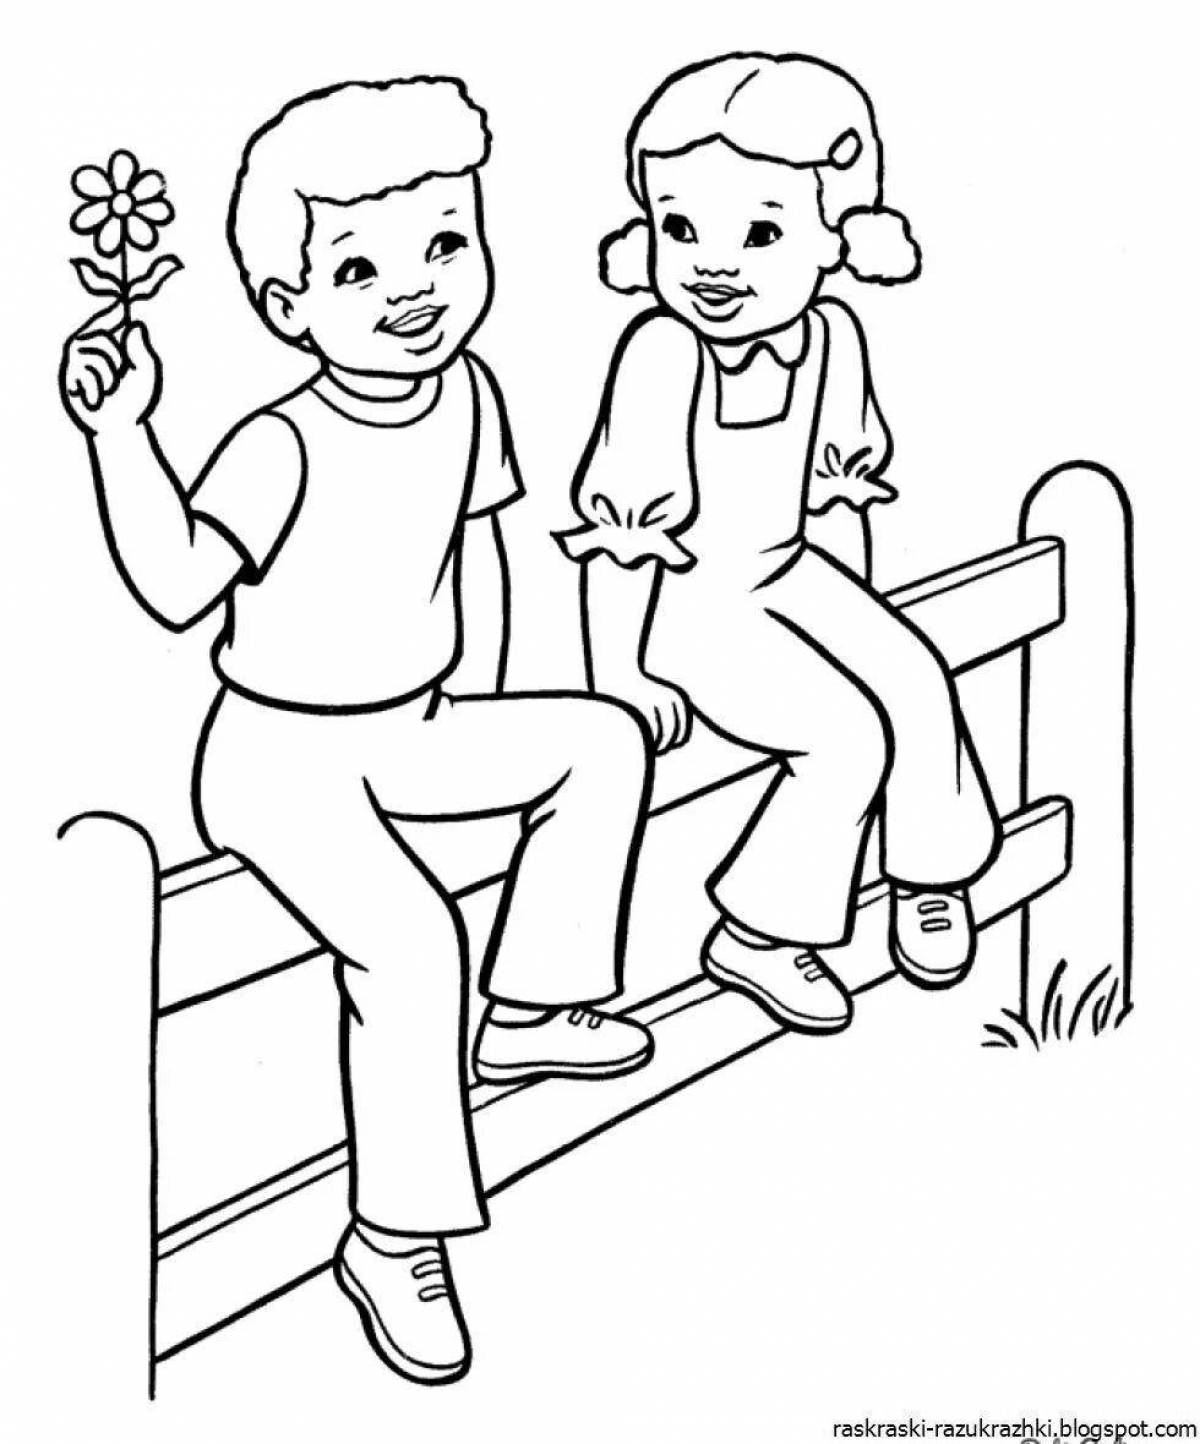 Bright children's coloring friendship